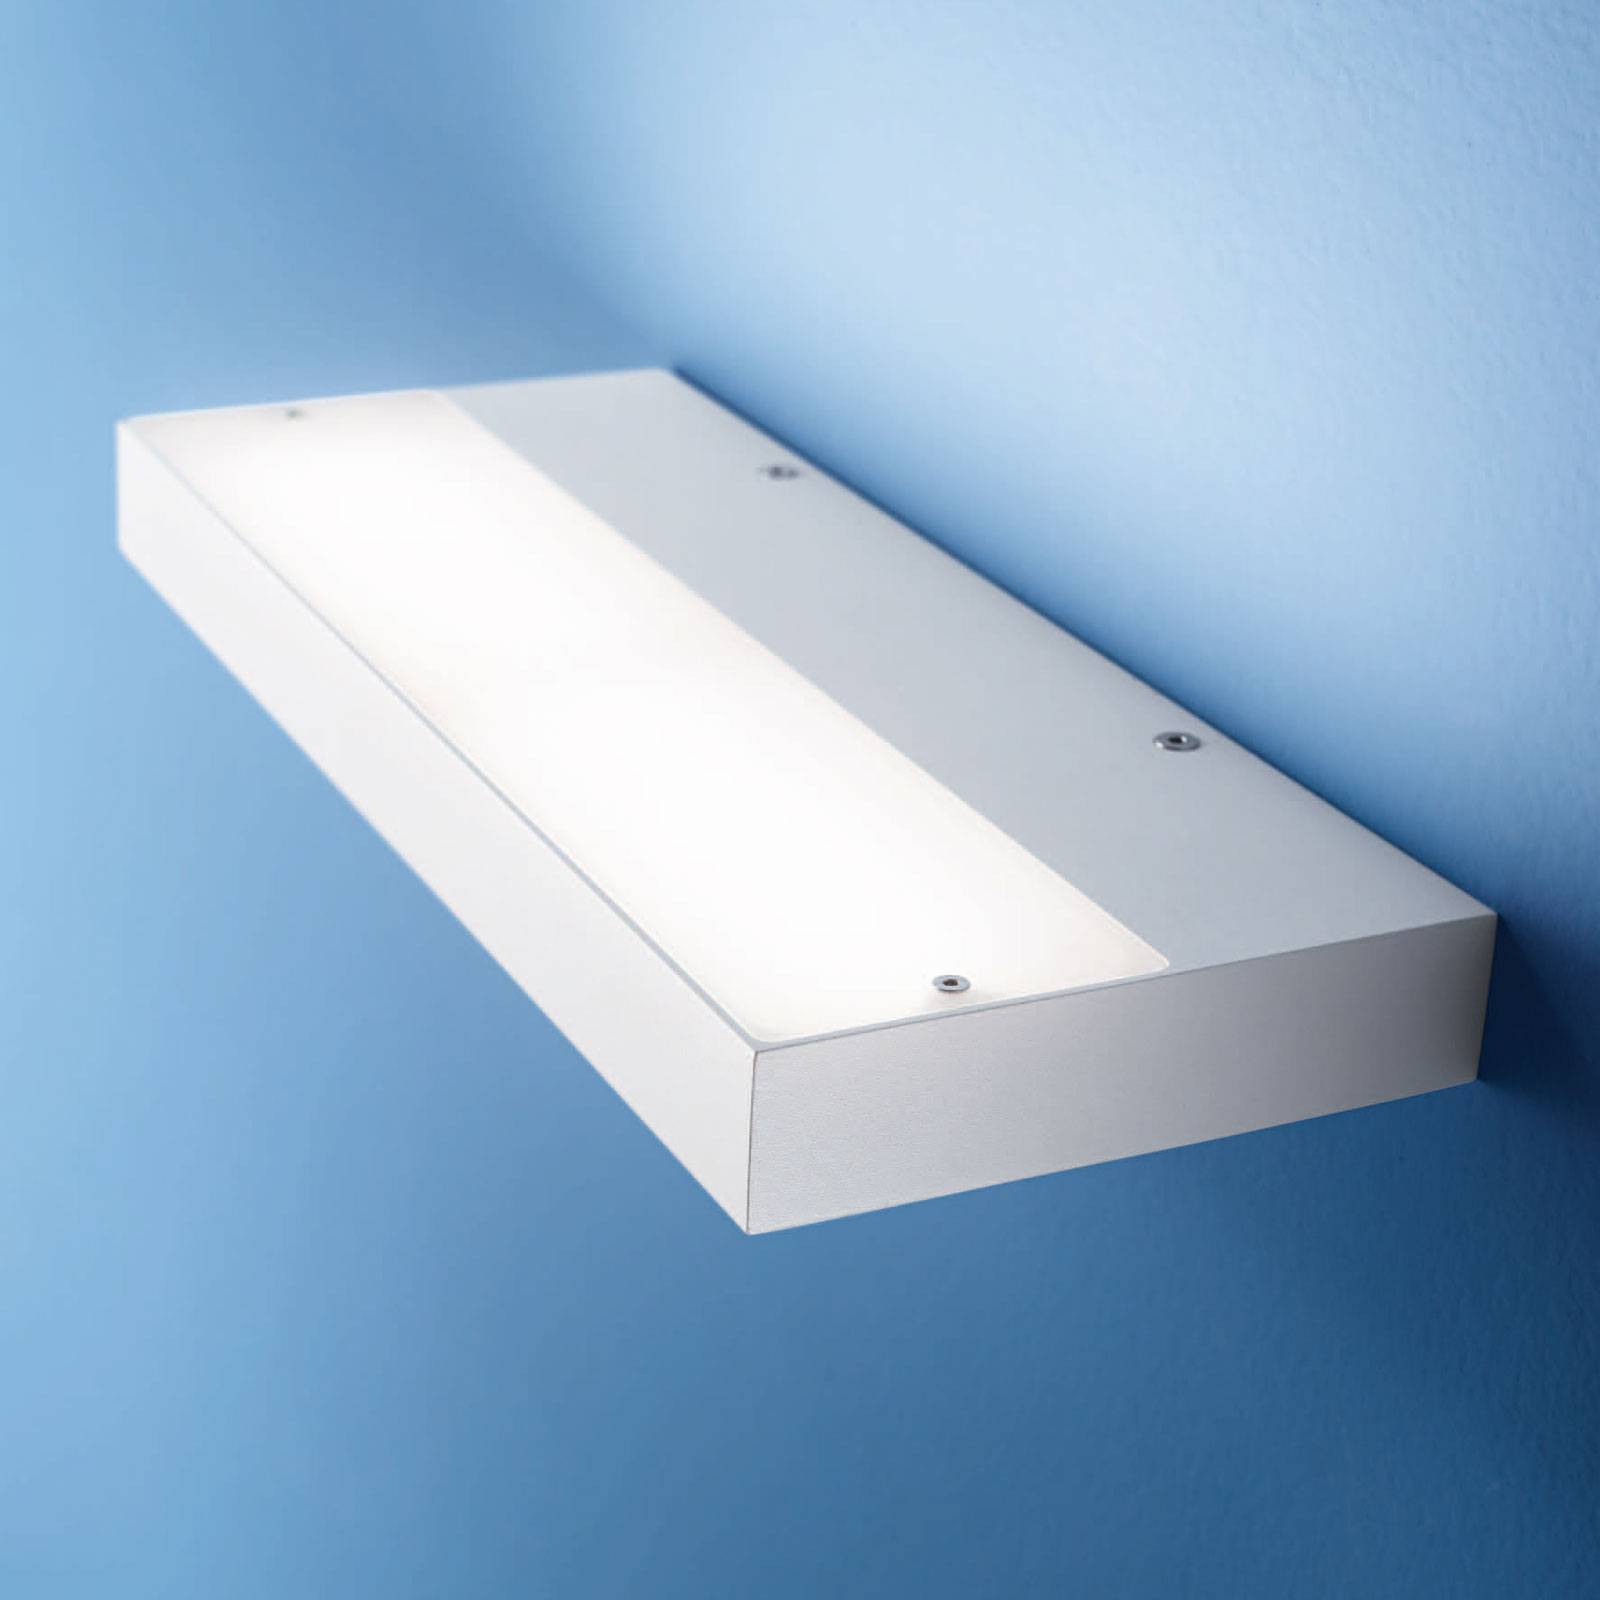 Linea light regolo led fali lámpa, 24 cm hosszú, fehér színű